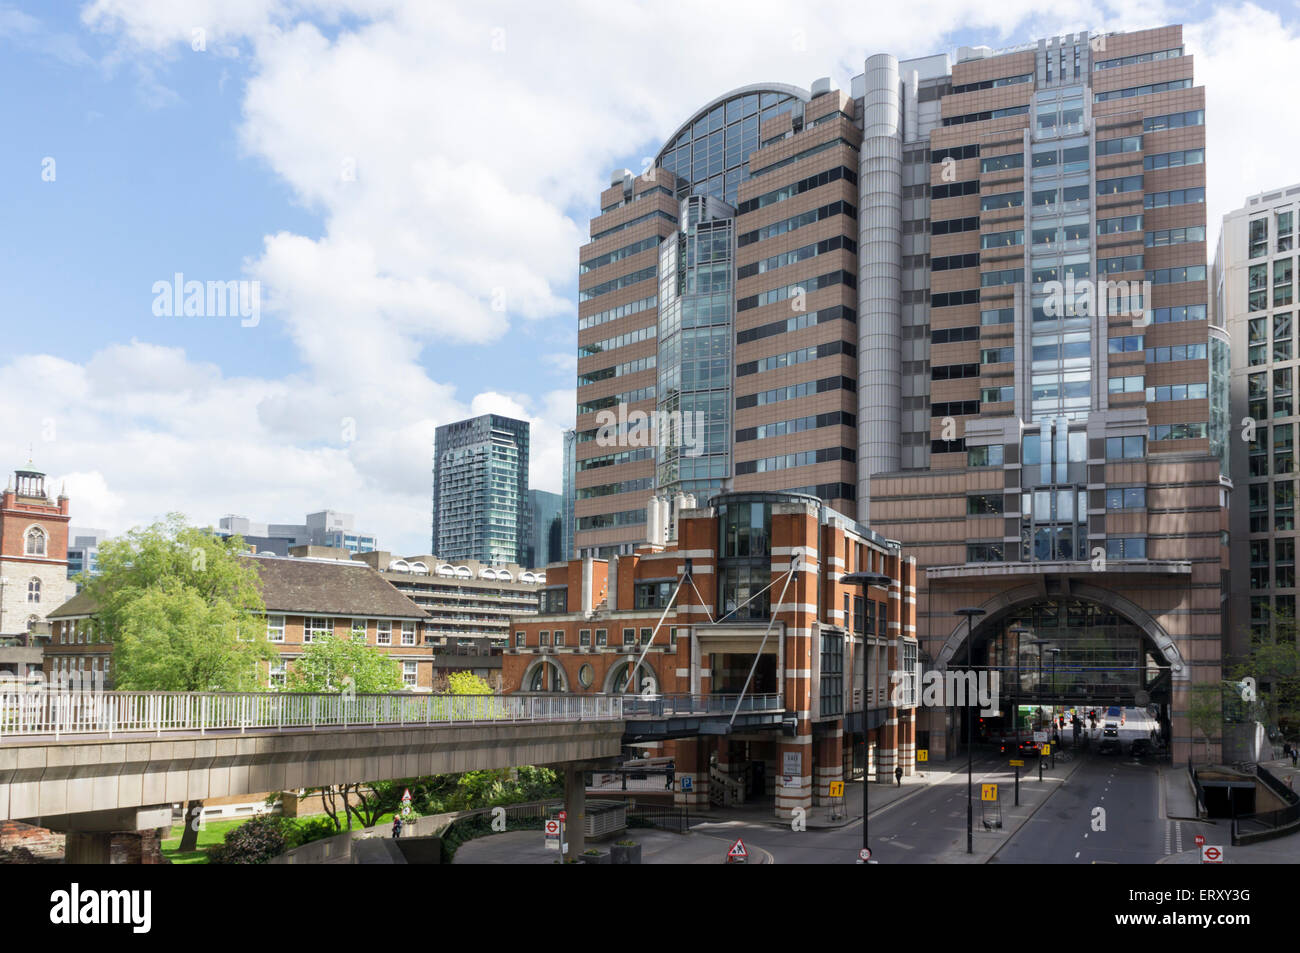 125 London Wall oder Alban-Tor Büroentwicklung entworfen von Sir Terry Farrell. Stockfoto